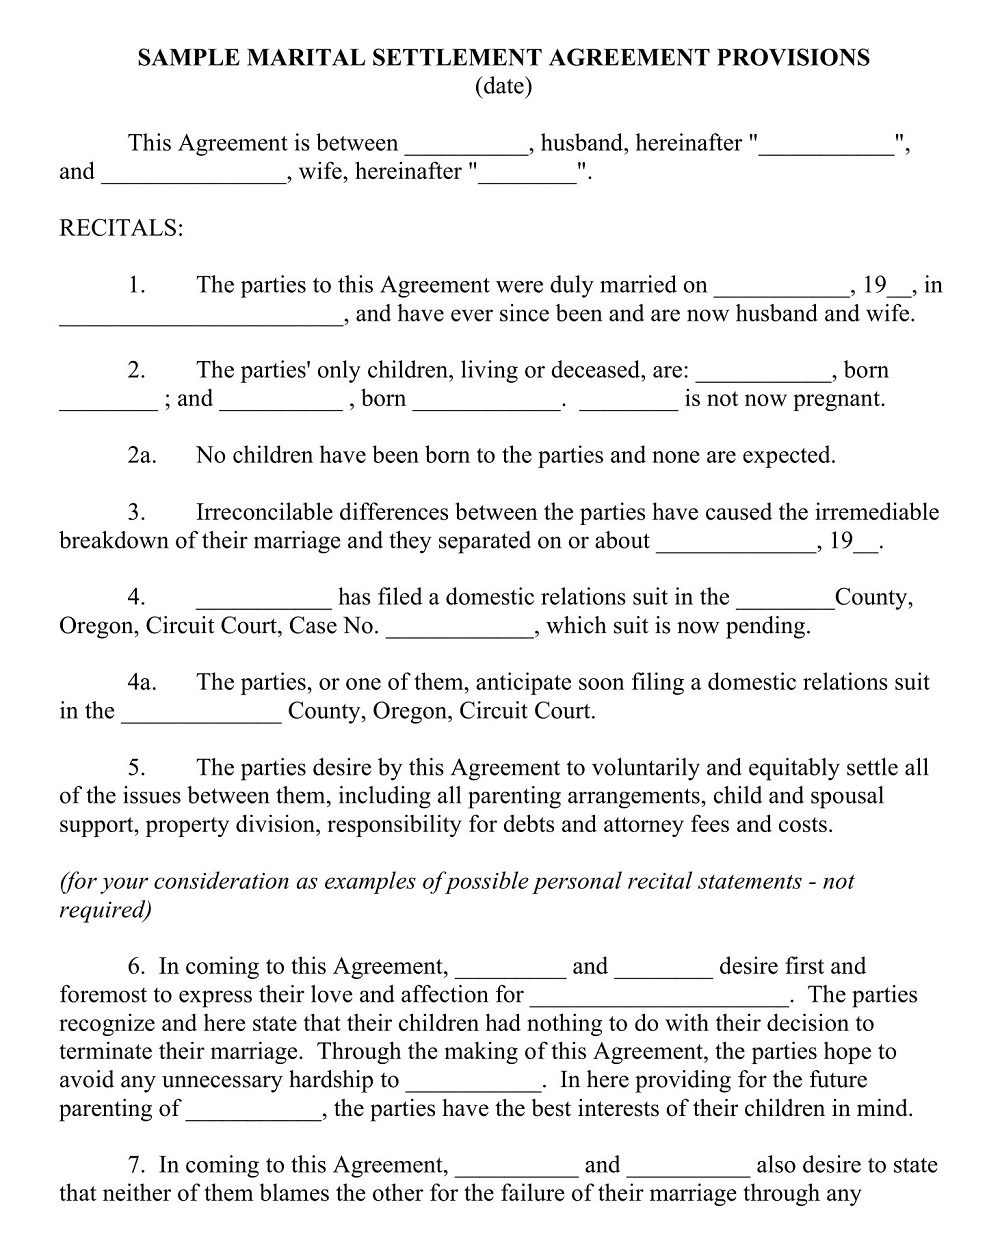 Marital Settlement Agreement Provisions